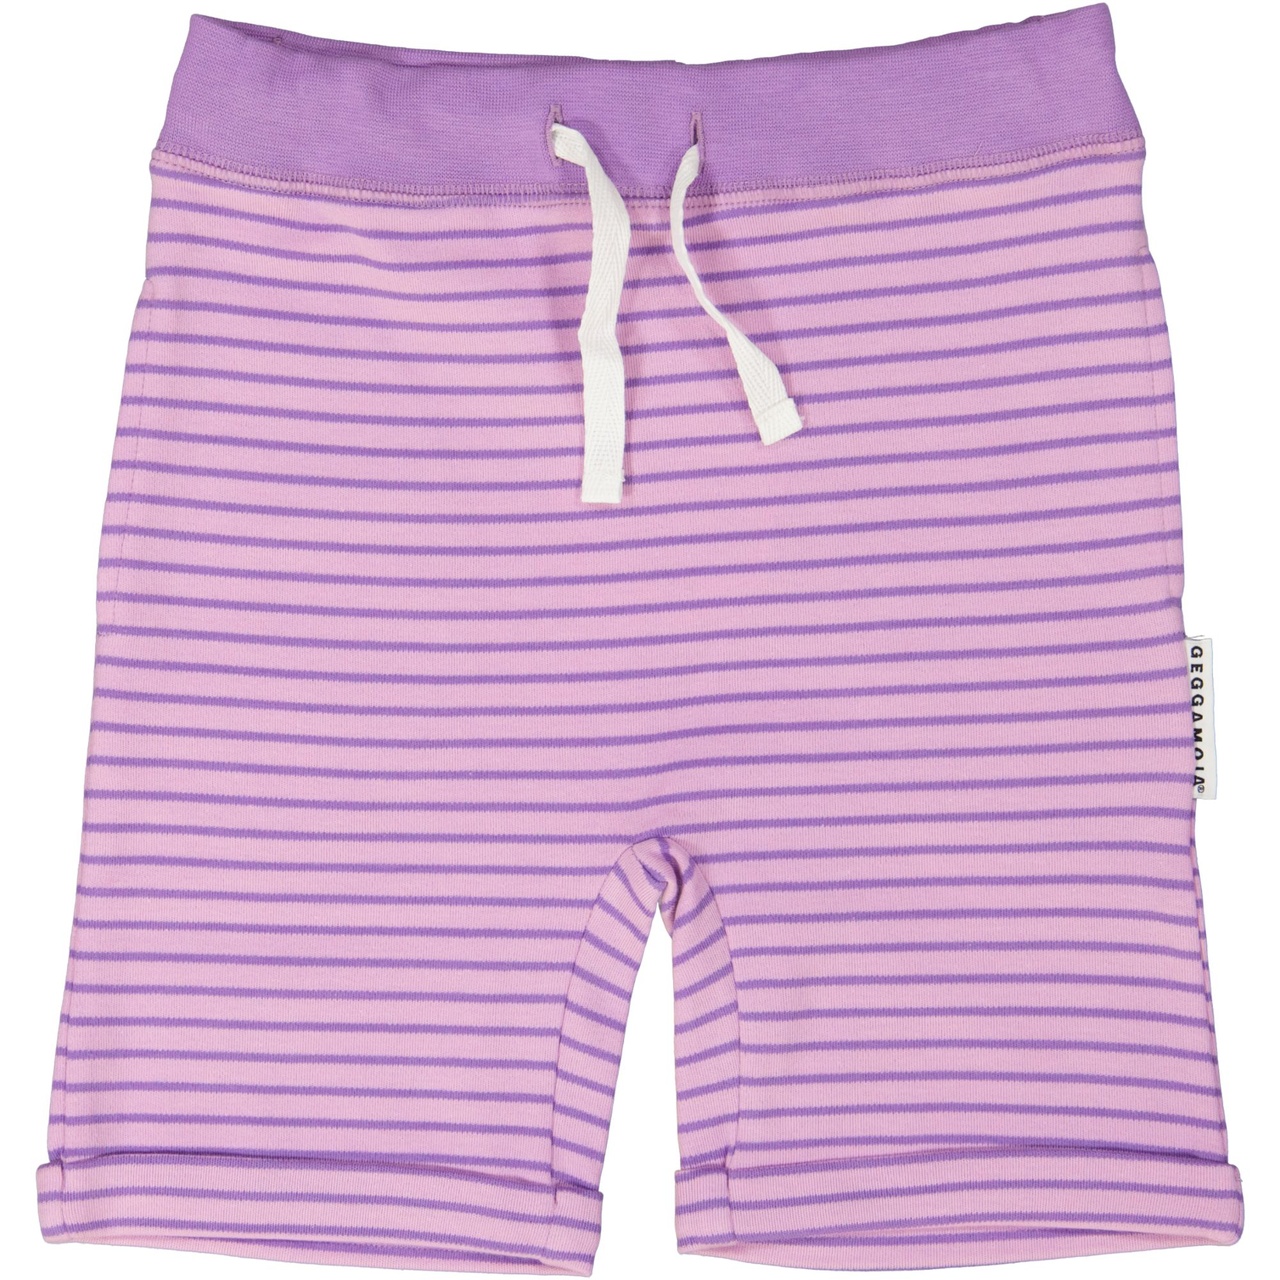 Shorts L.purple/purple  146/152